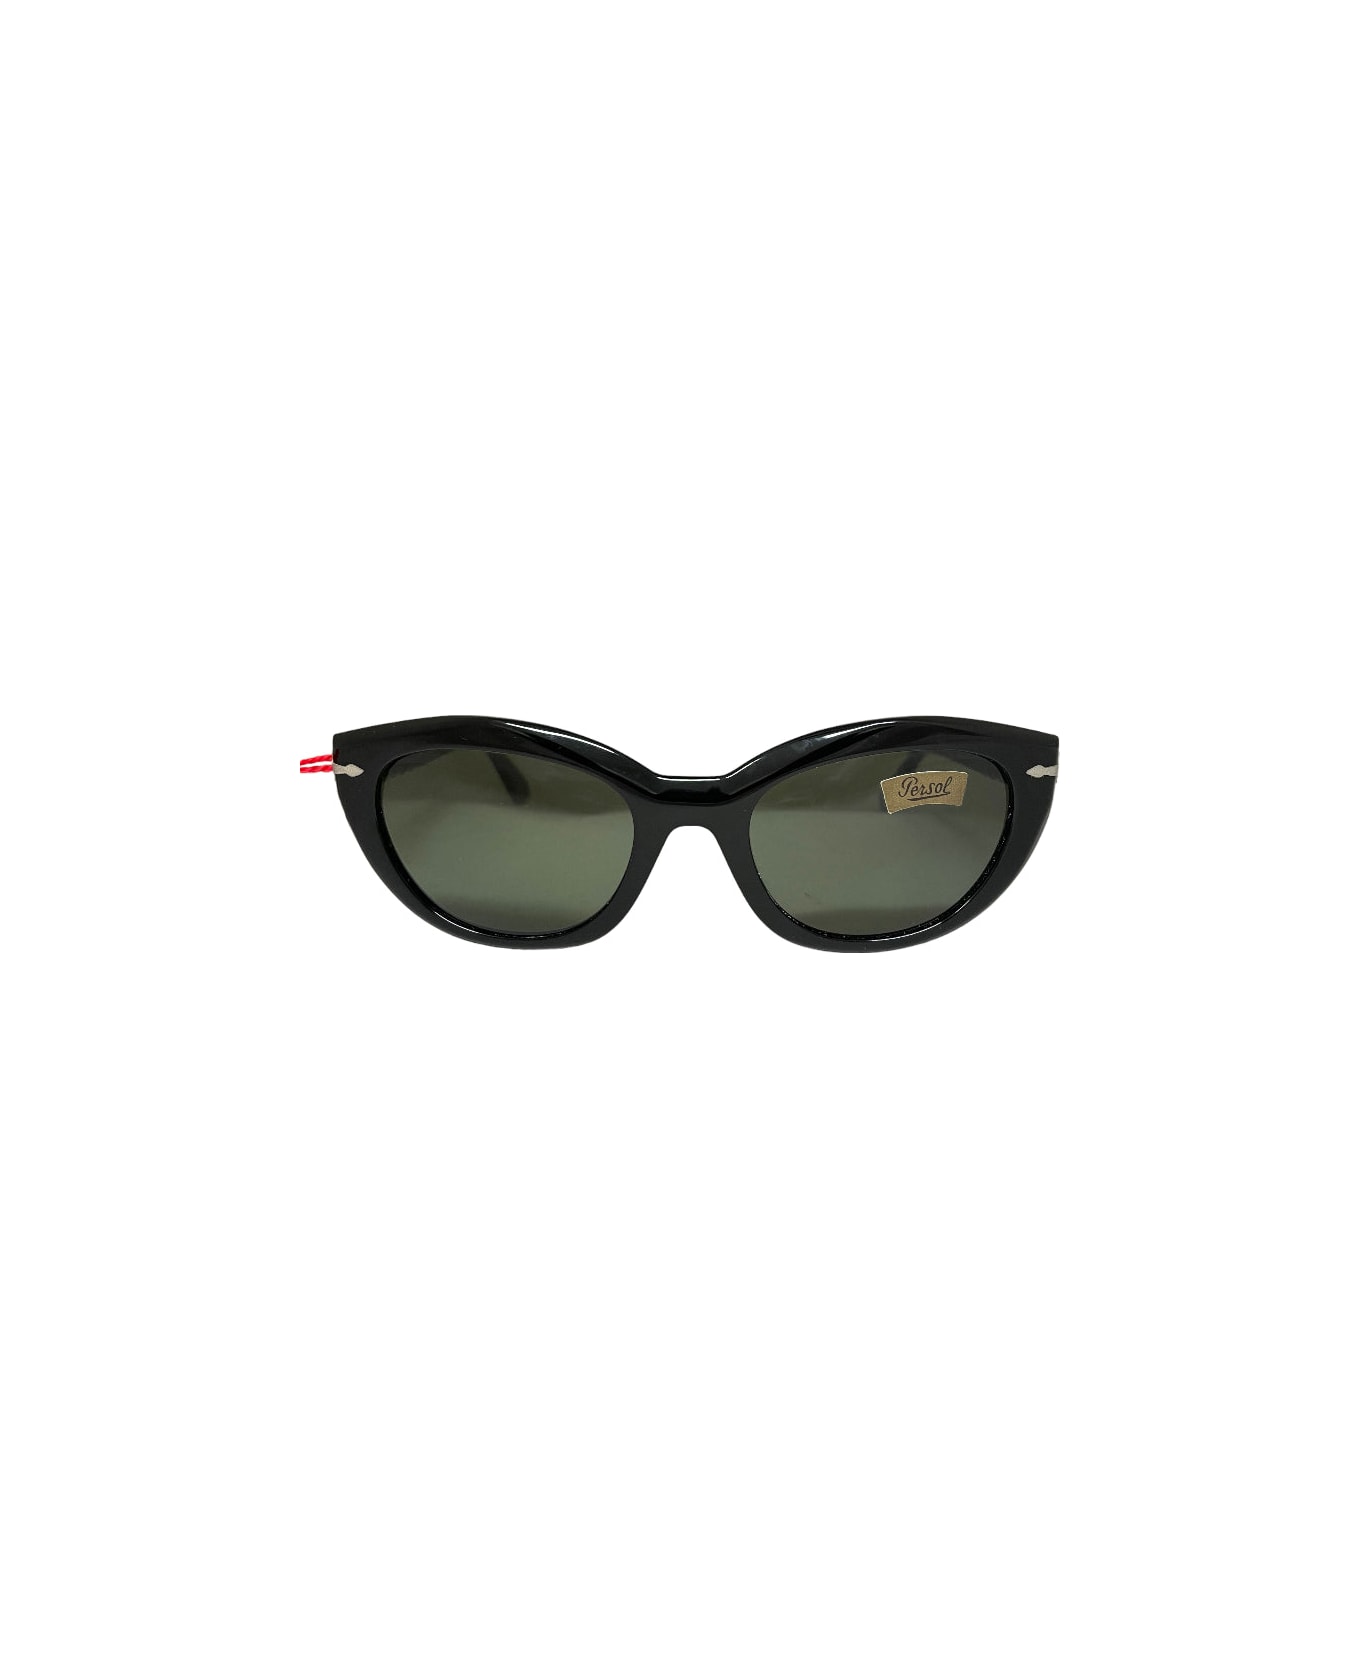 Persol 843 - Black Sunglasses サングラス